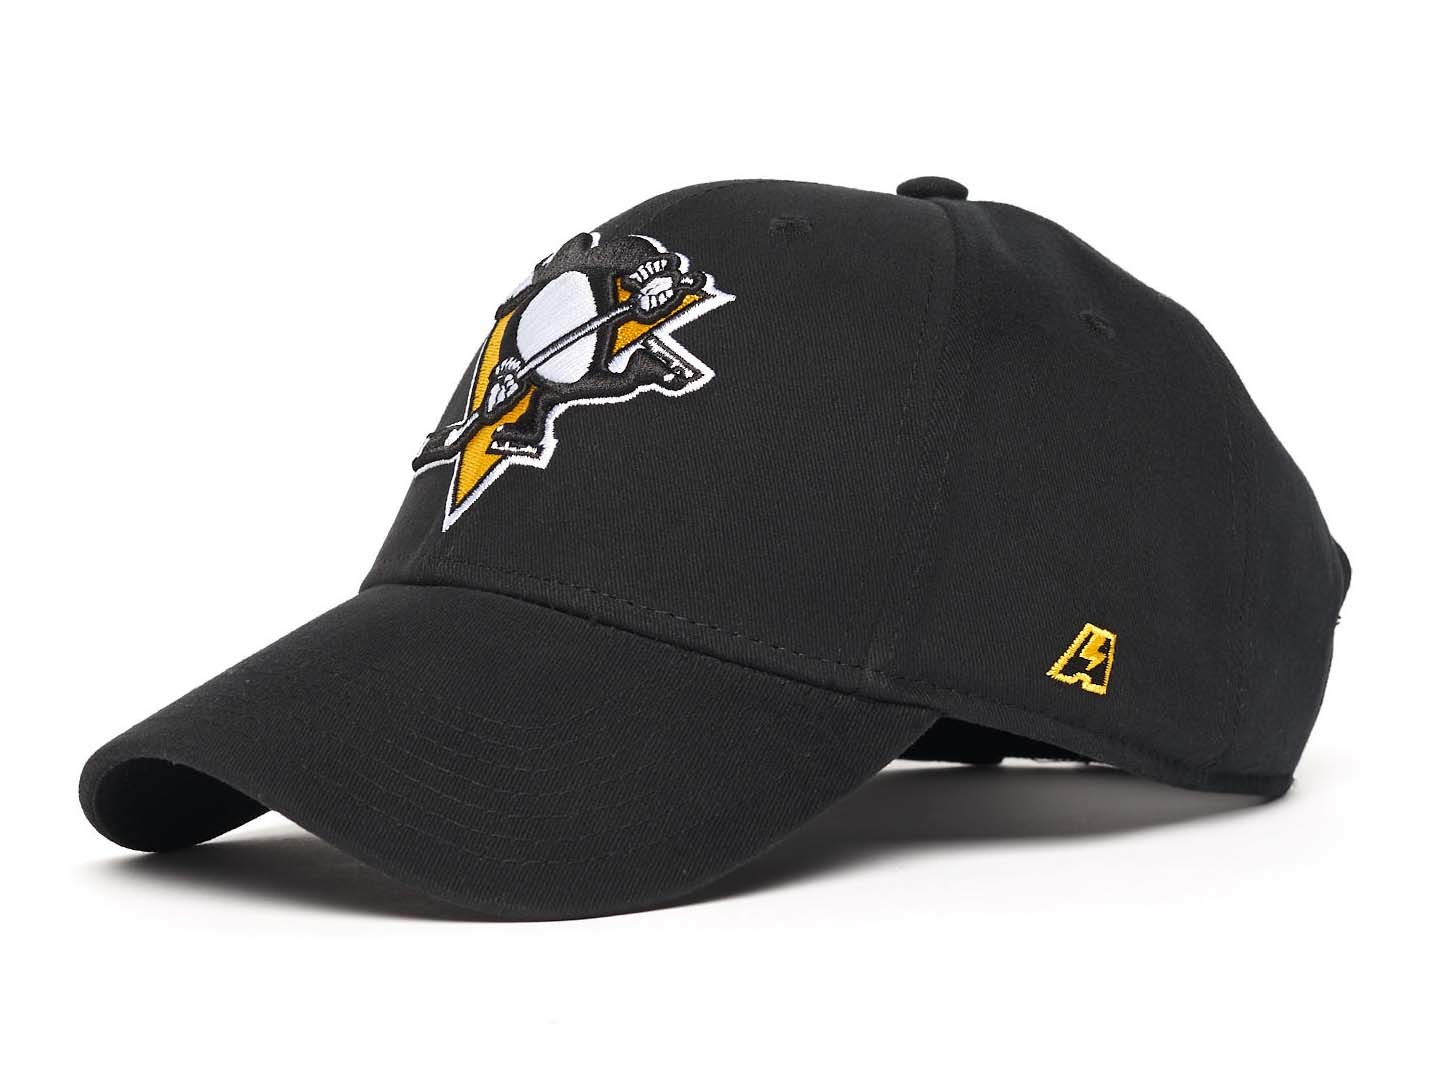 Бейсболка NHL Pittsburgh Penguins (подростковая)